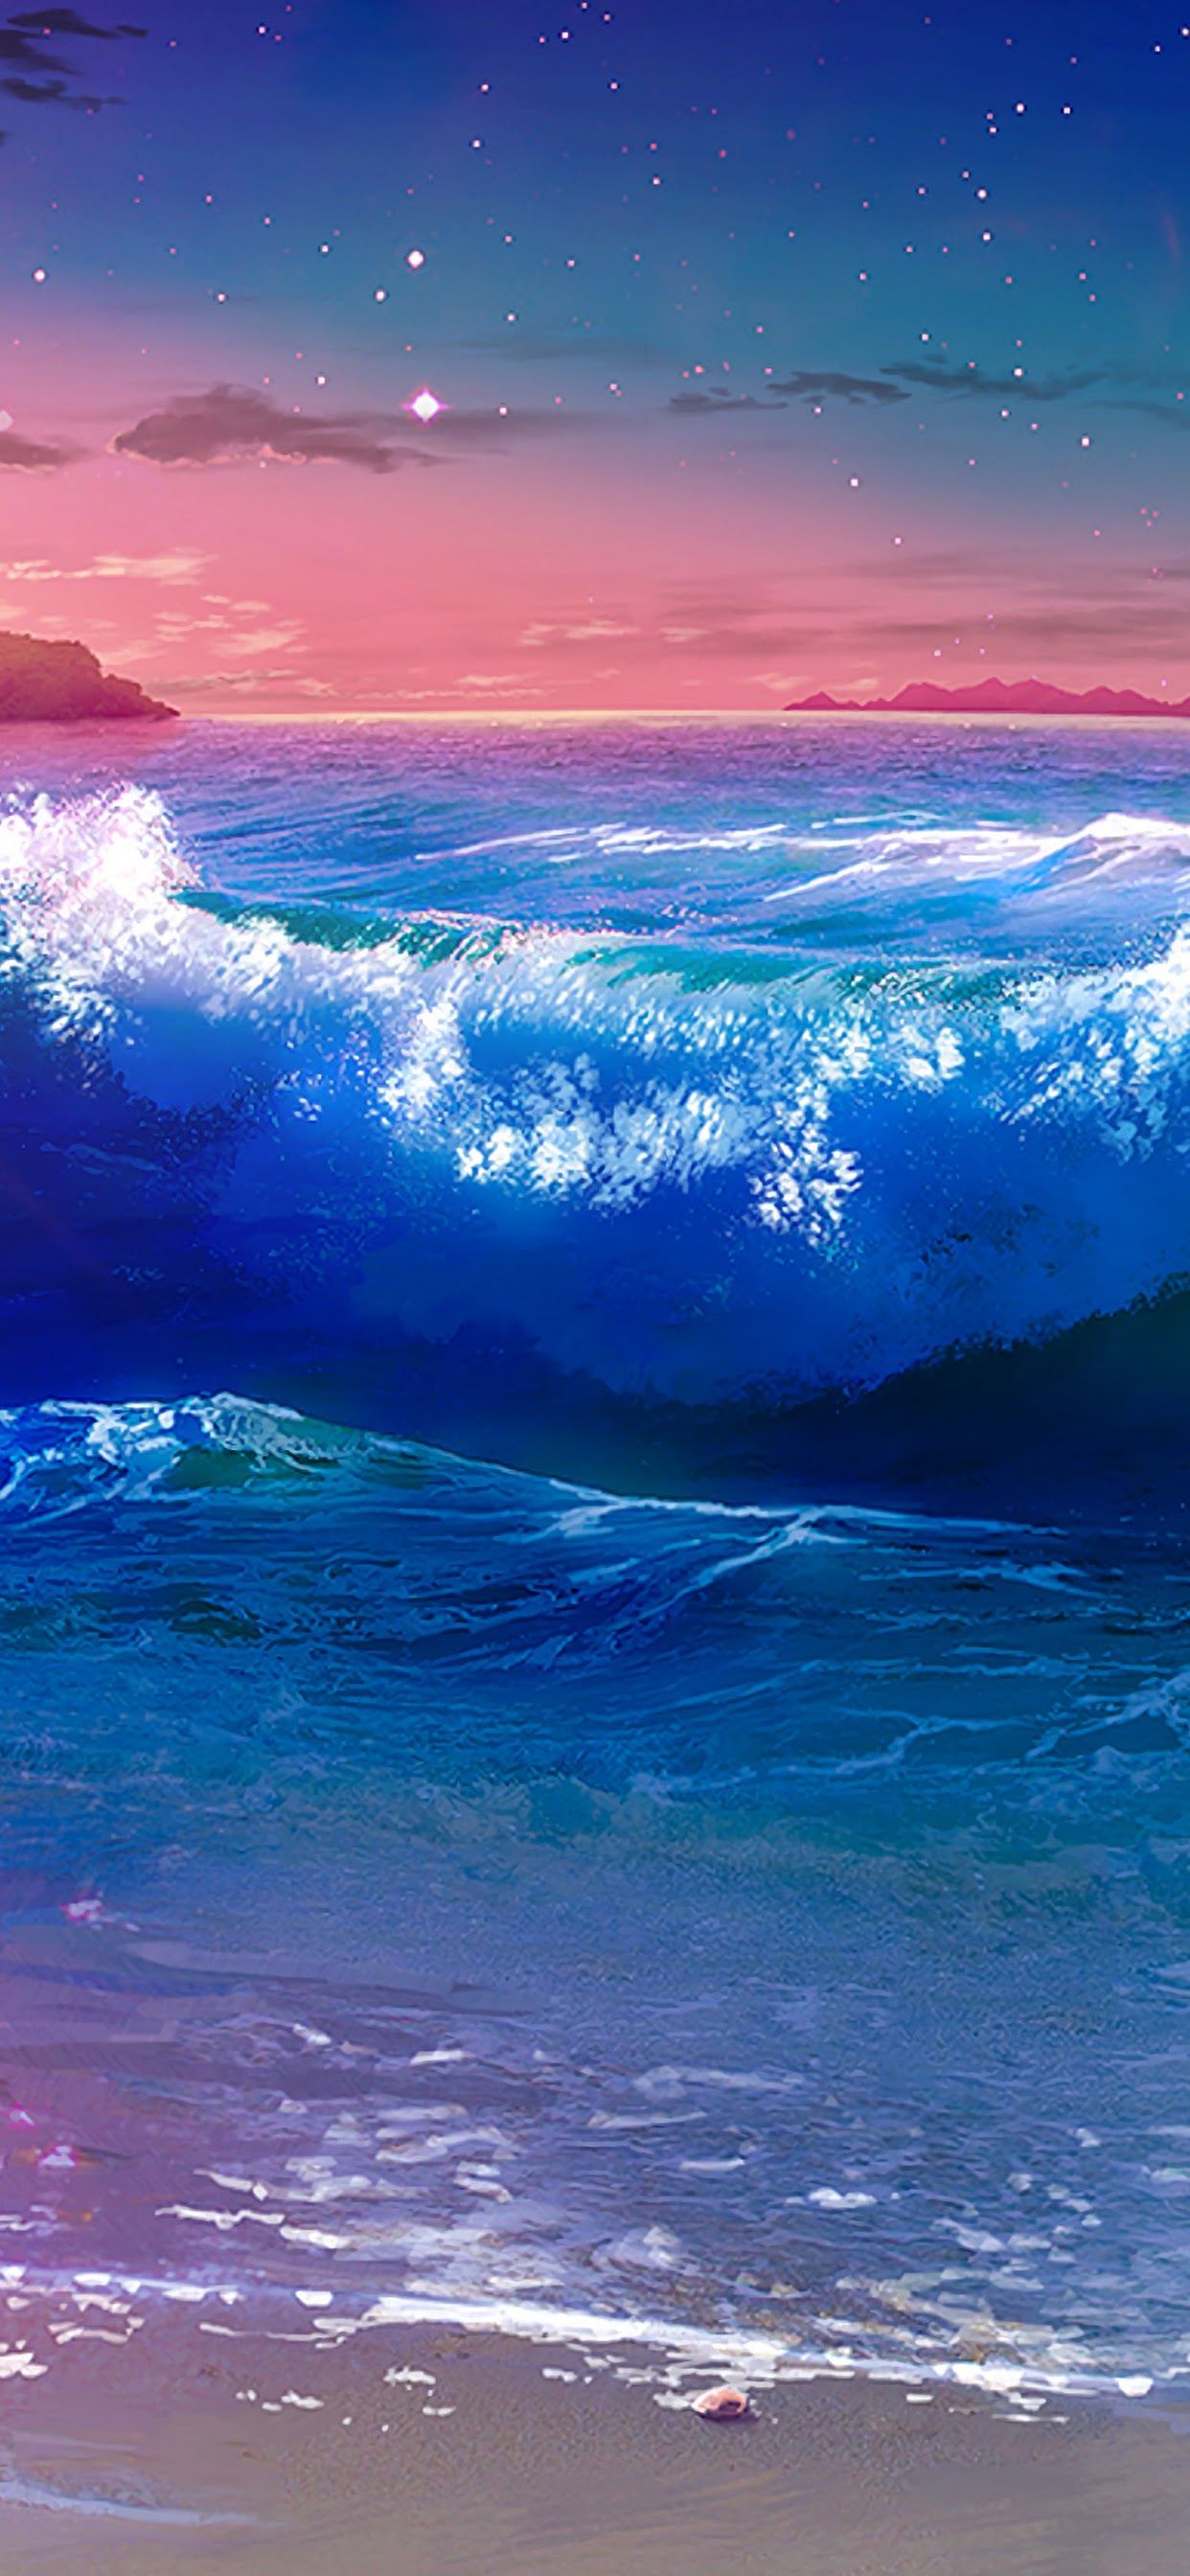 Beach Waves Sunset Scenery Anime 4K Wallpaper